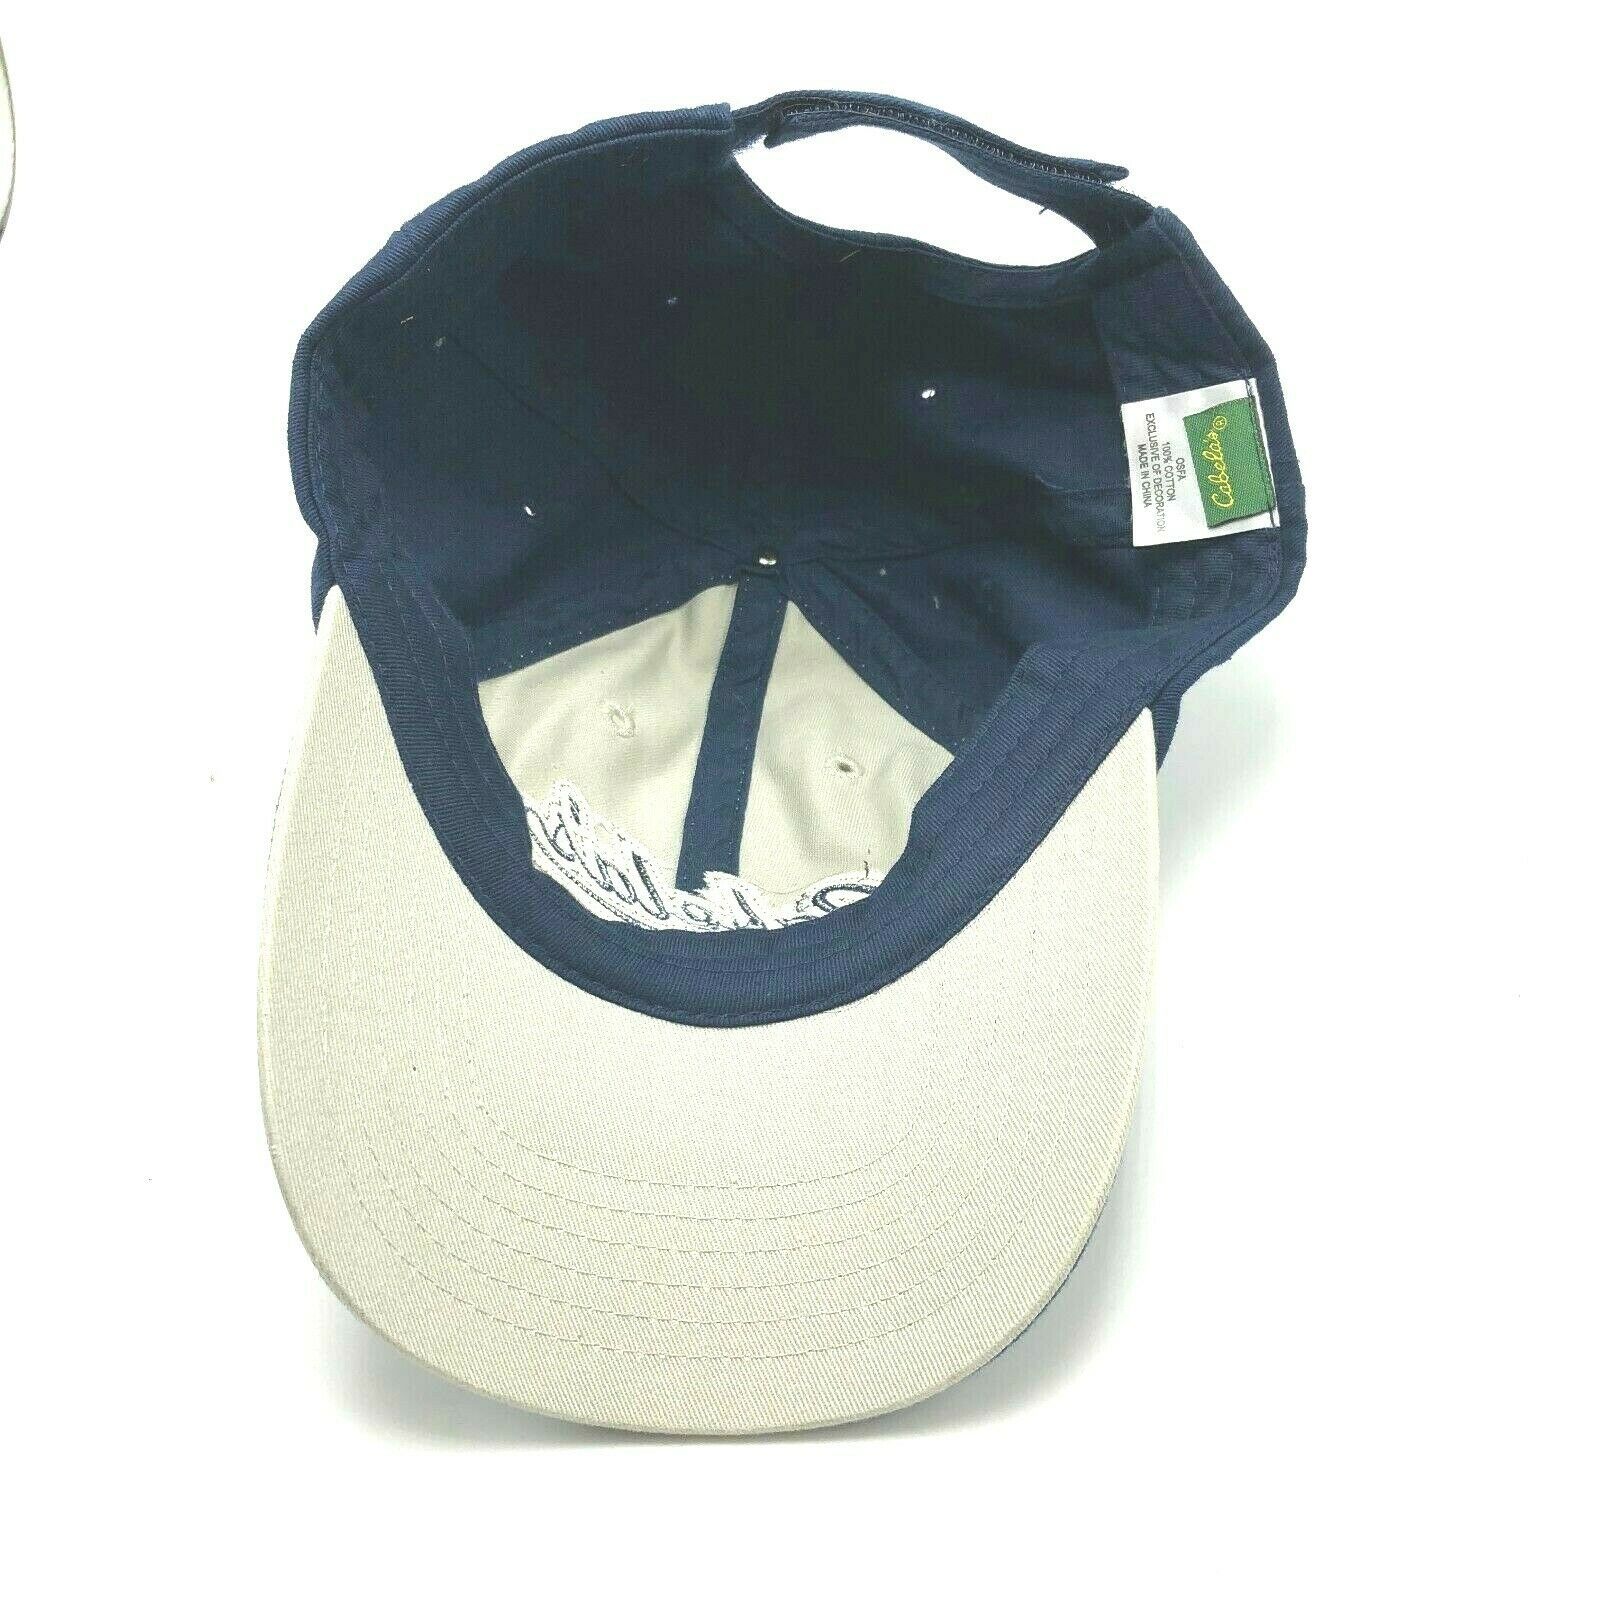 Cabelas 61 Hunting Fishing Sports Hat Cap Strapback Navy Blue Khaki - Hats